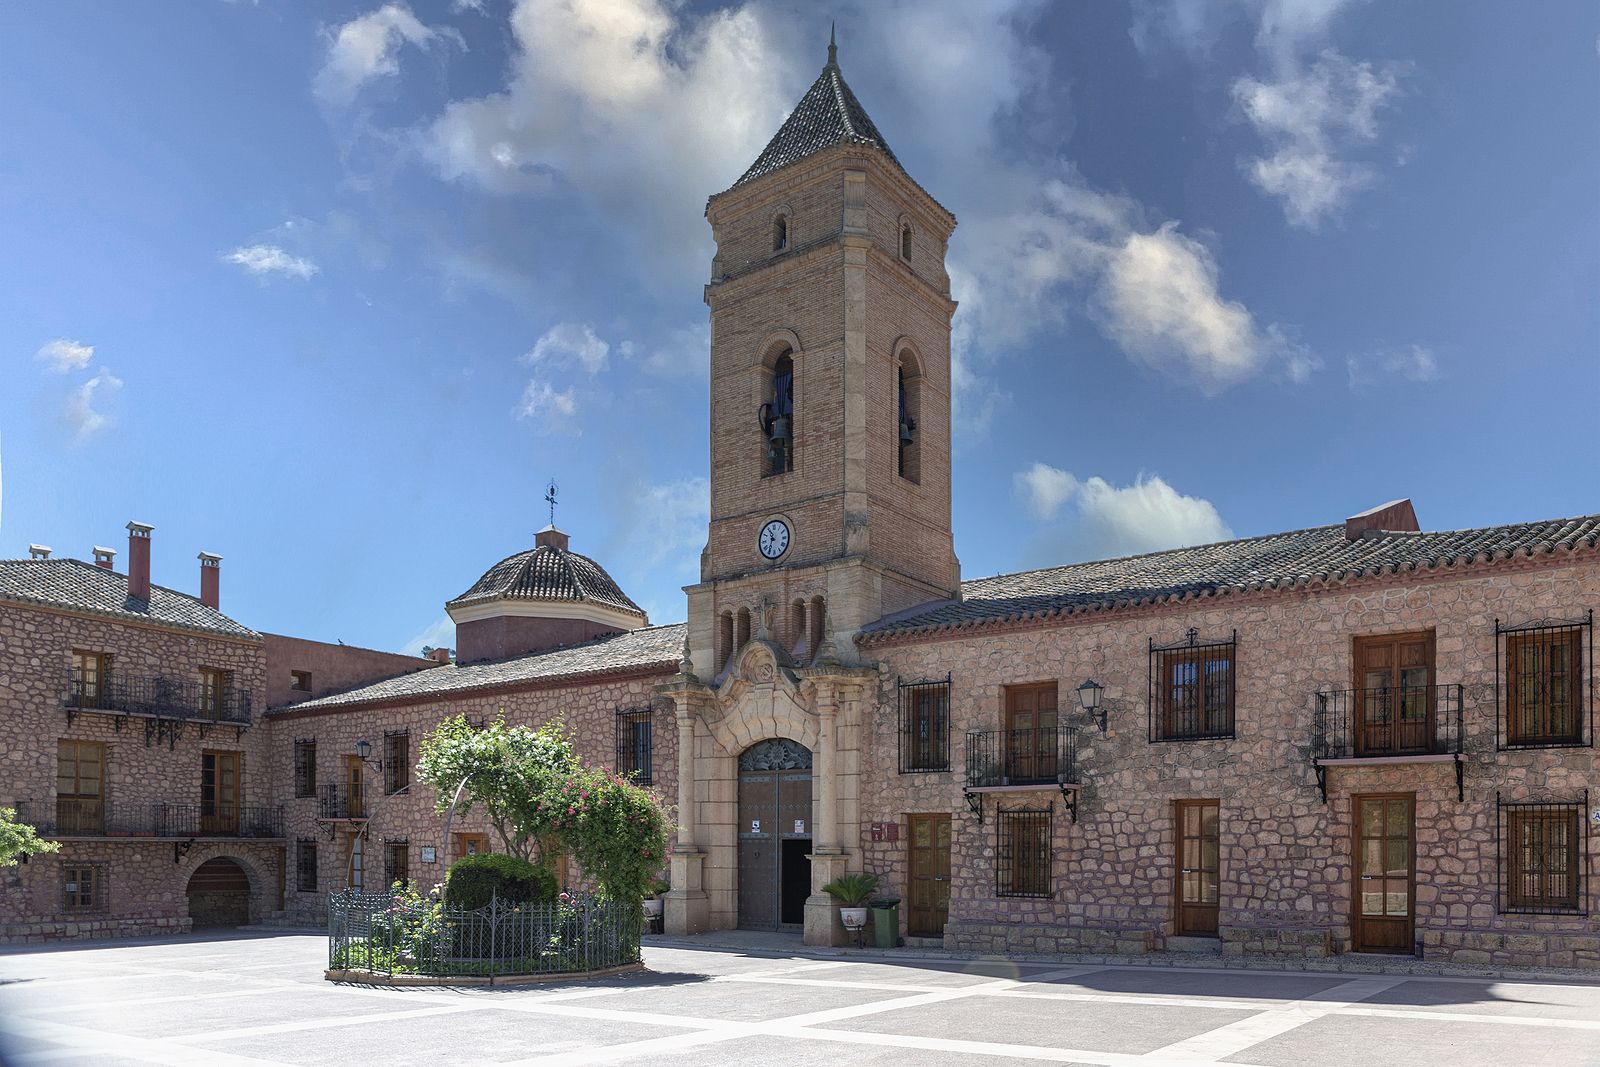 Ruta: arquitectura religiosa mudéjar y gastronomía de Cehegín, Totana y Alguazas. (Iglesia de Santa Eulalia en Totana - bigstock)